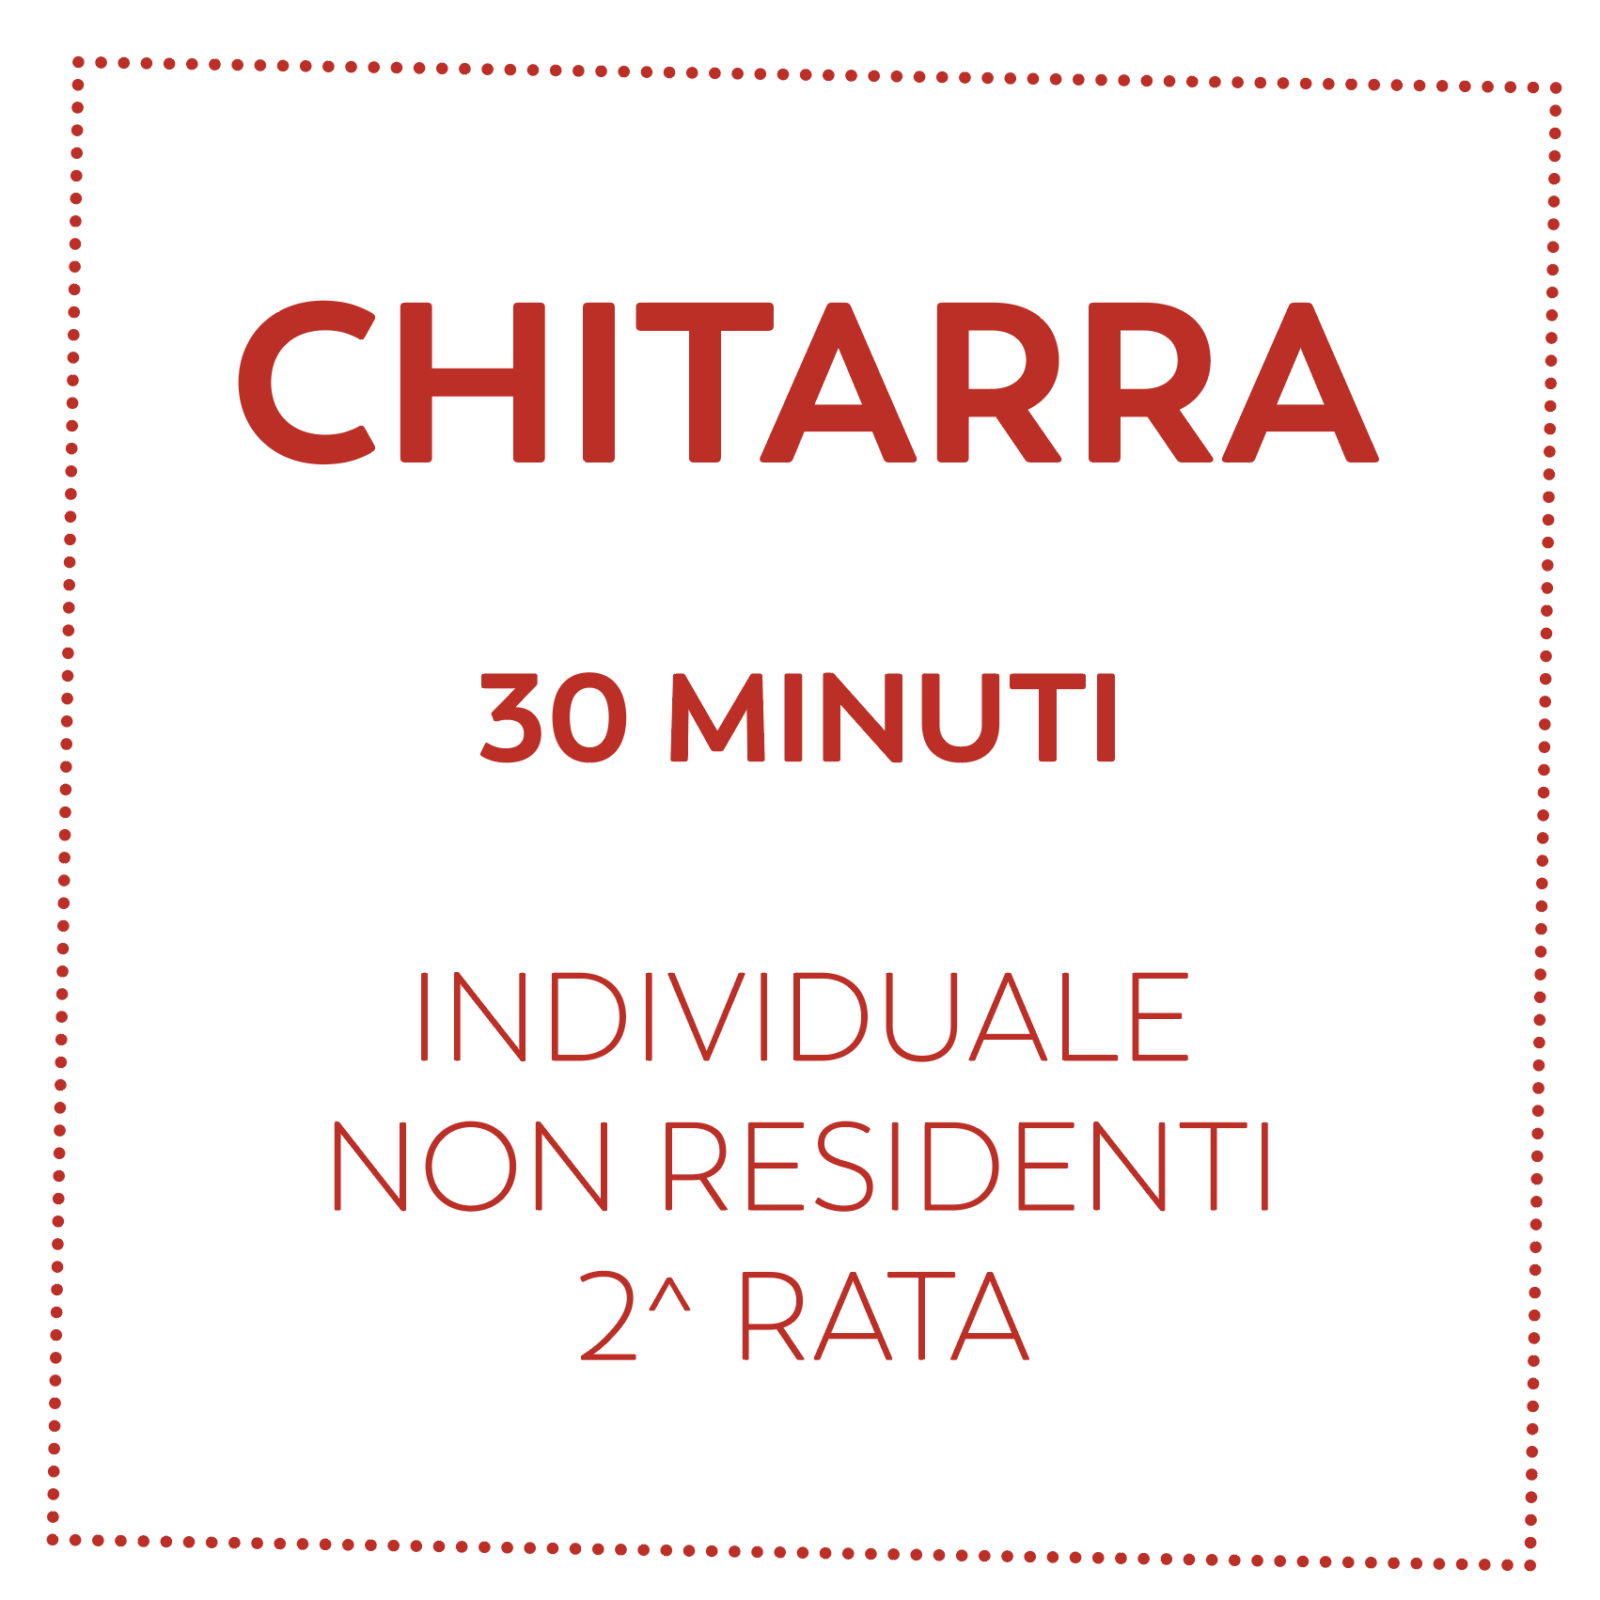 CHITARRA 30 MIN - NON RESIDENTI - 2^ RATA